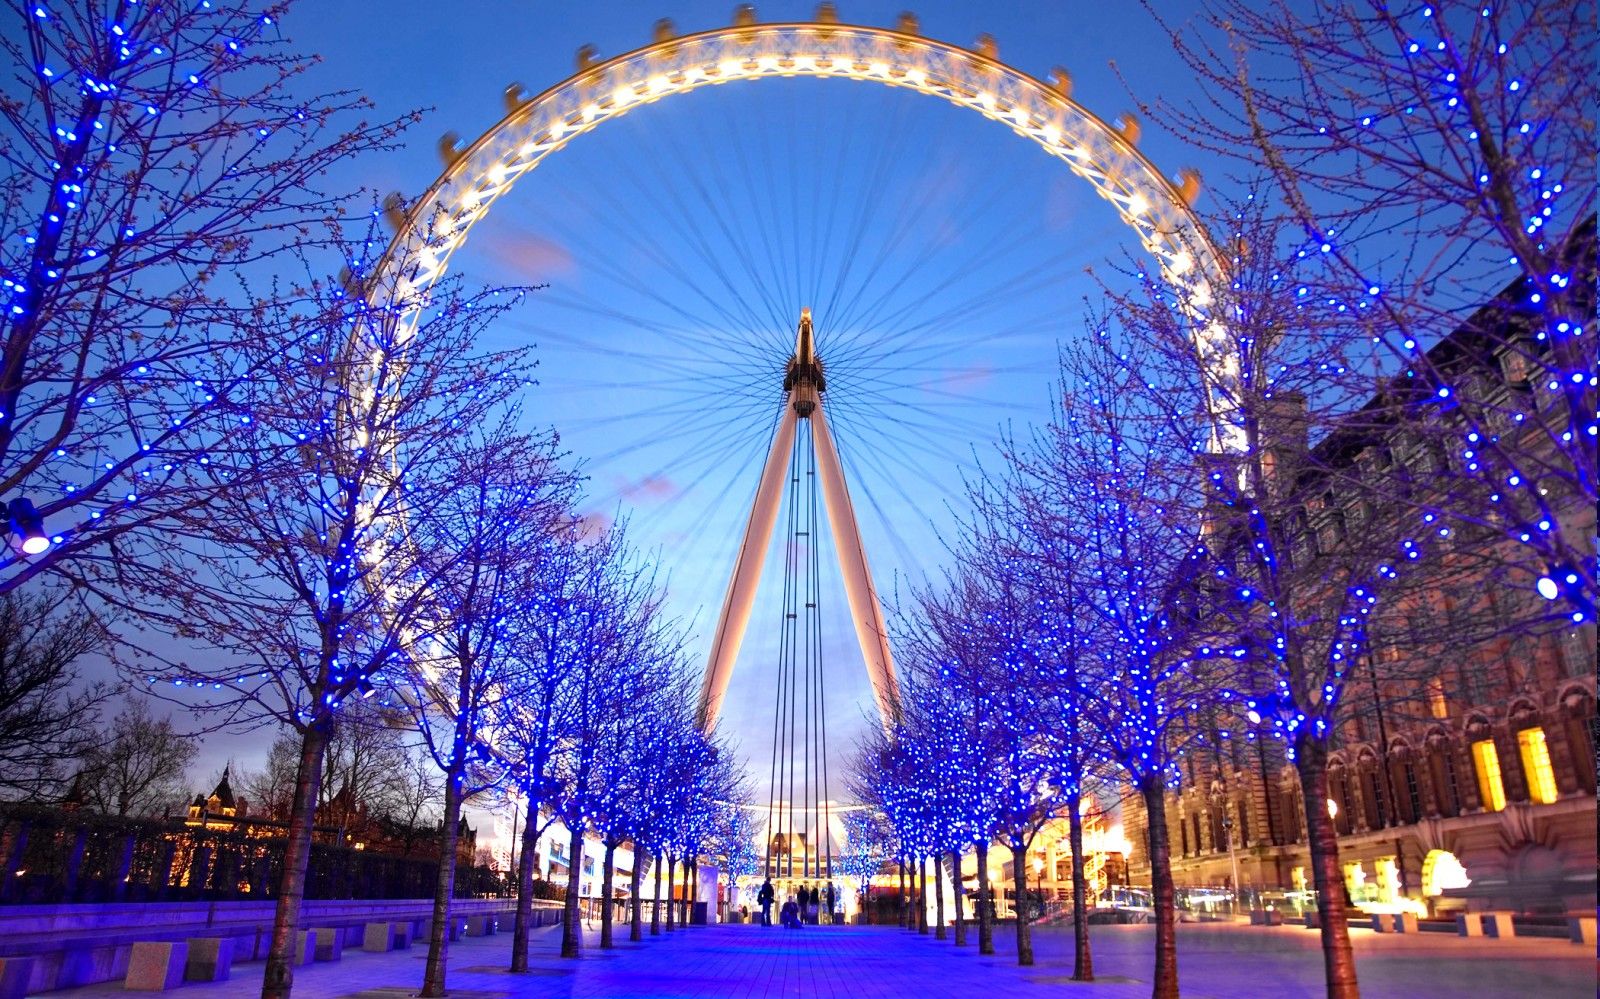 Wallpaper, 2100x1312 px, blue, christmas lights, ferris wheel, London Eye, path, trees 2100x1312